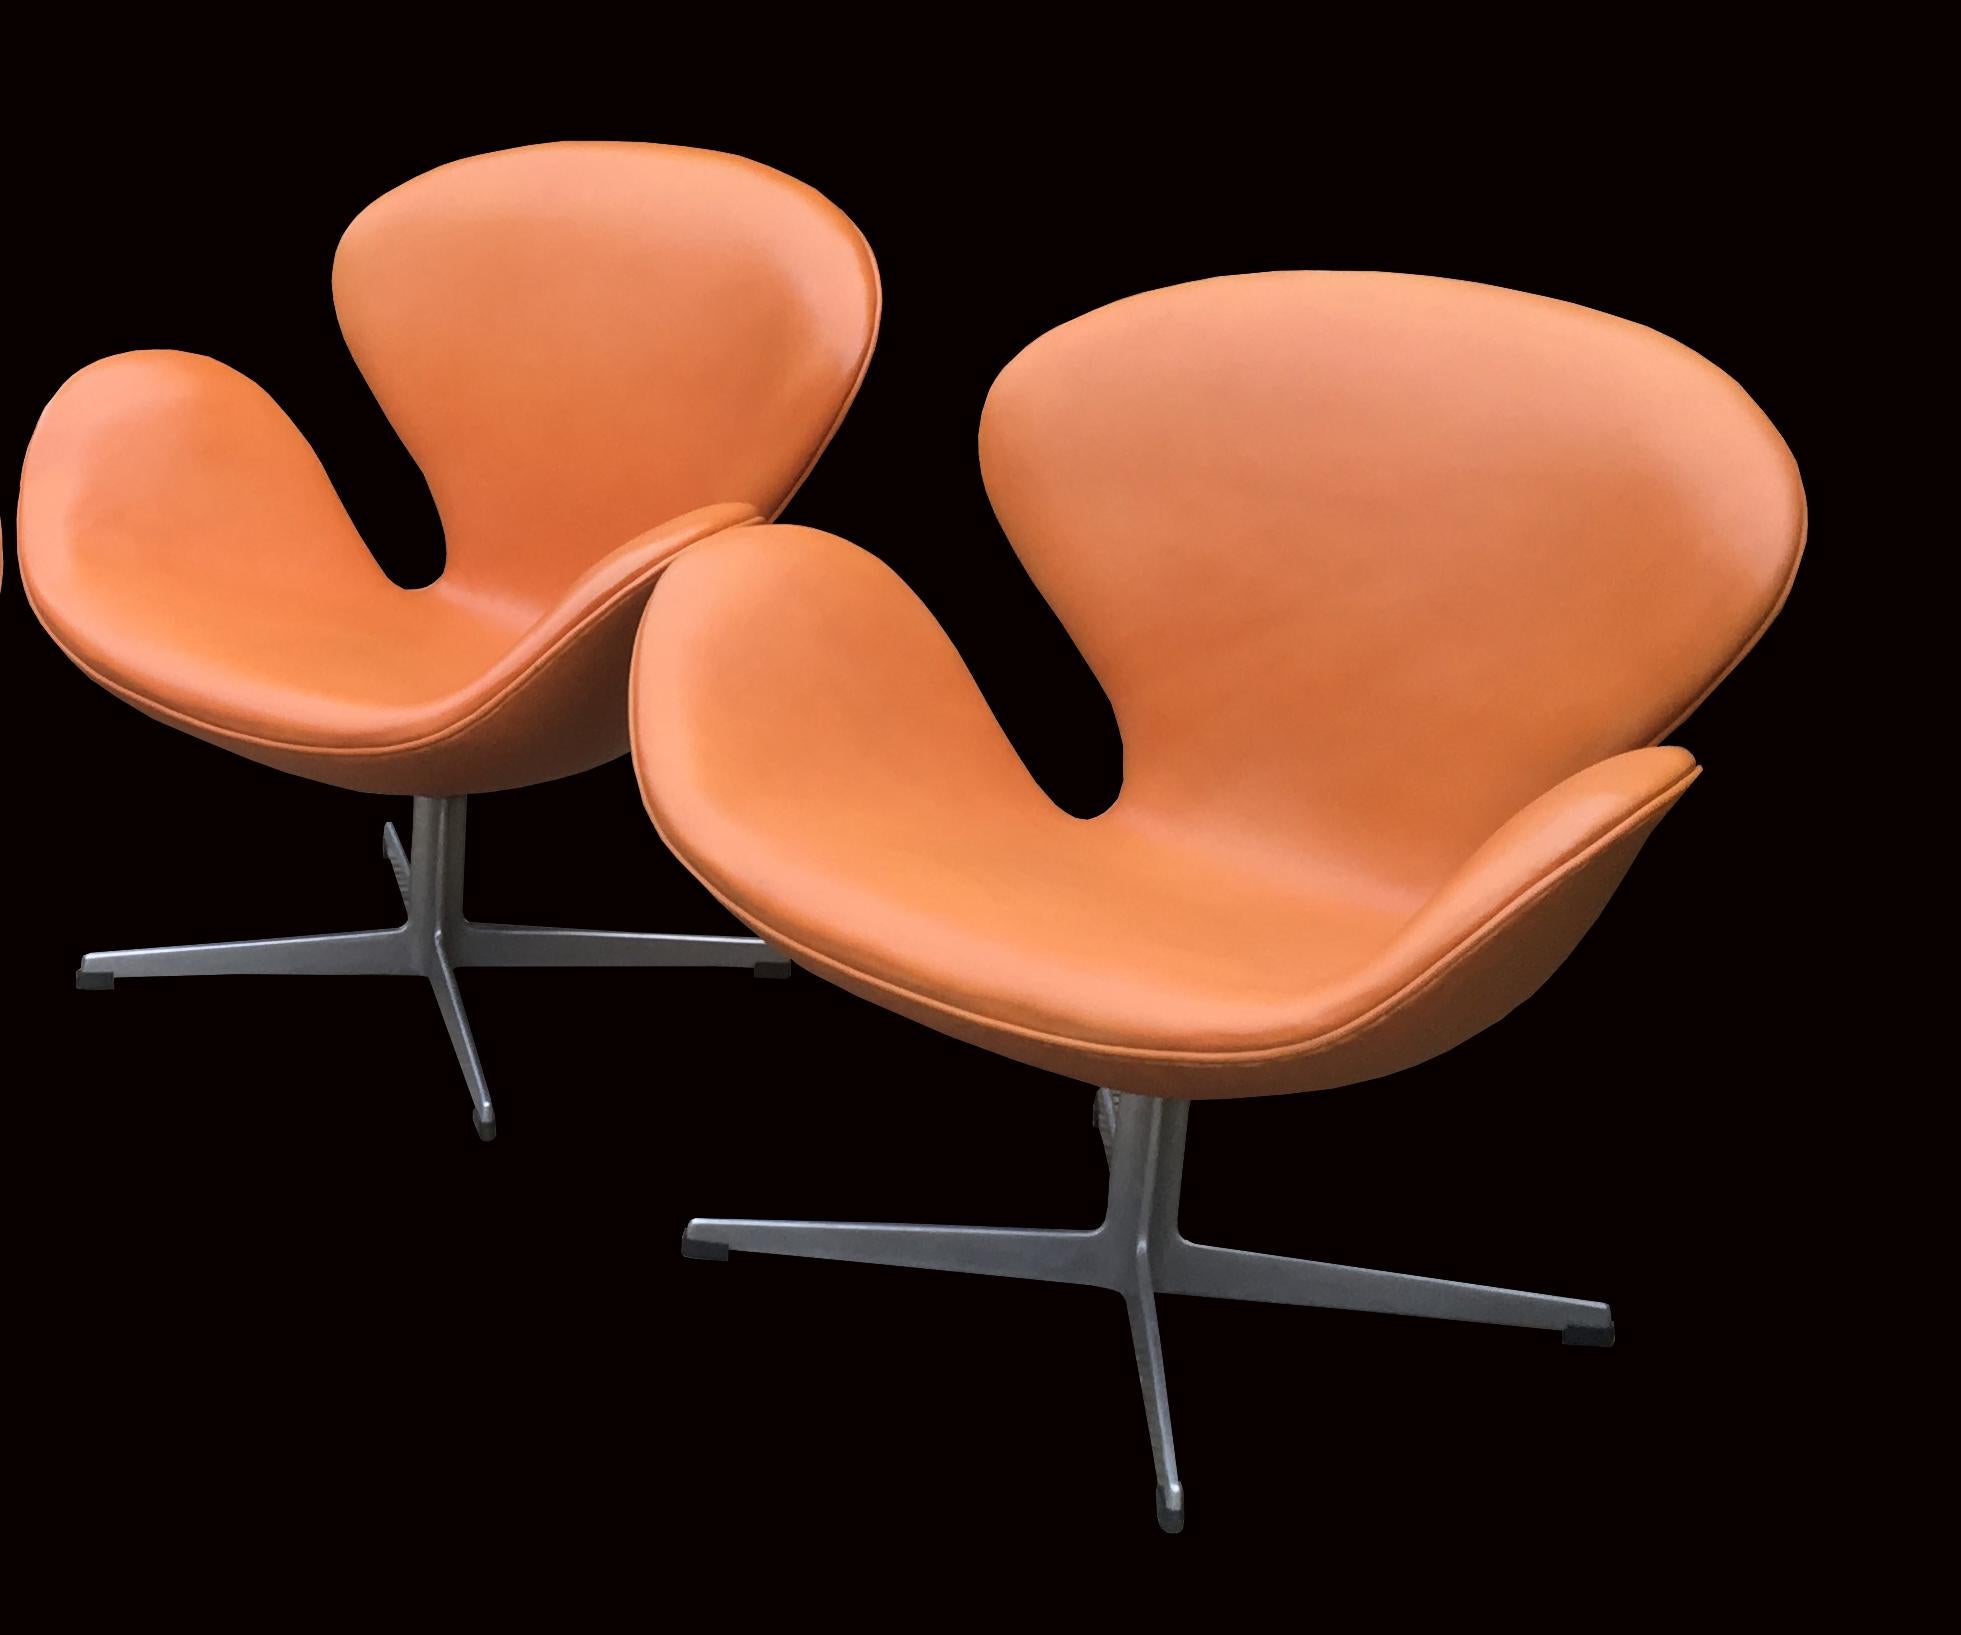 Rare Pair of Cognac Leather Swan Chairs by Arne Jacobsen for Fritz Hansen (Dänisch)